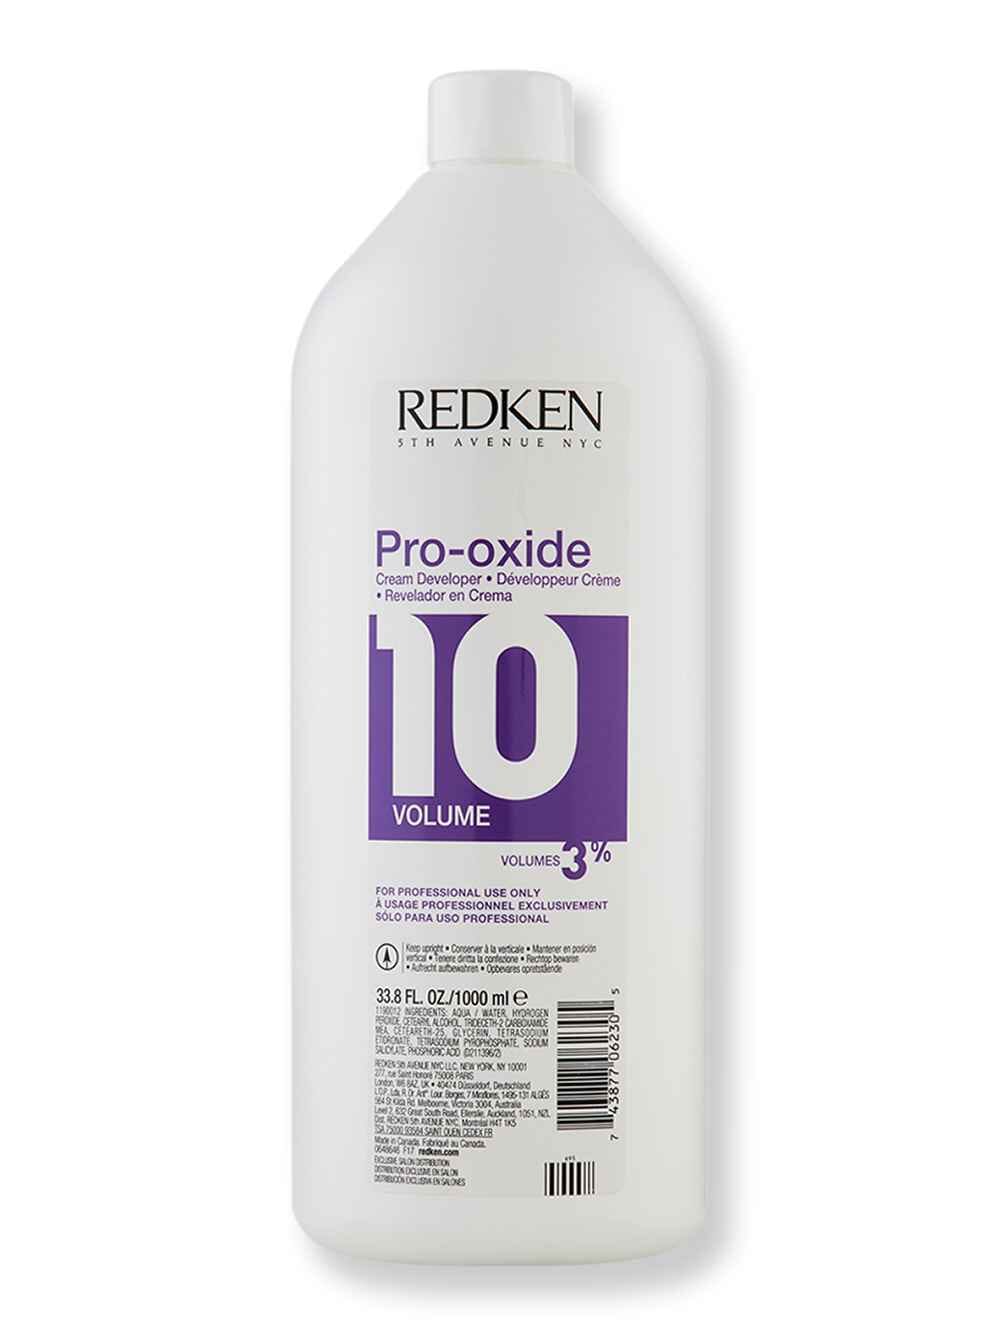 Redken Redken Pro-Oxide Cream Developer 10 Volume Liter Coloring & Highlighting Tools 